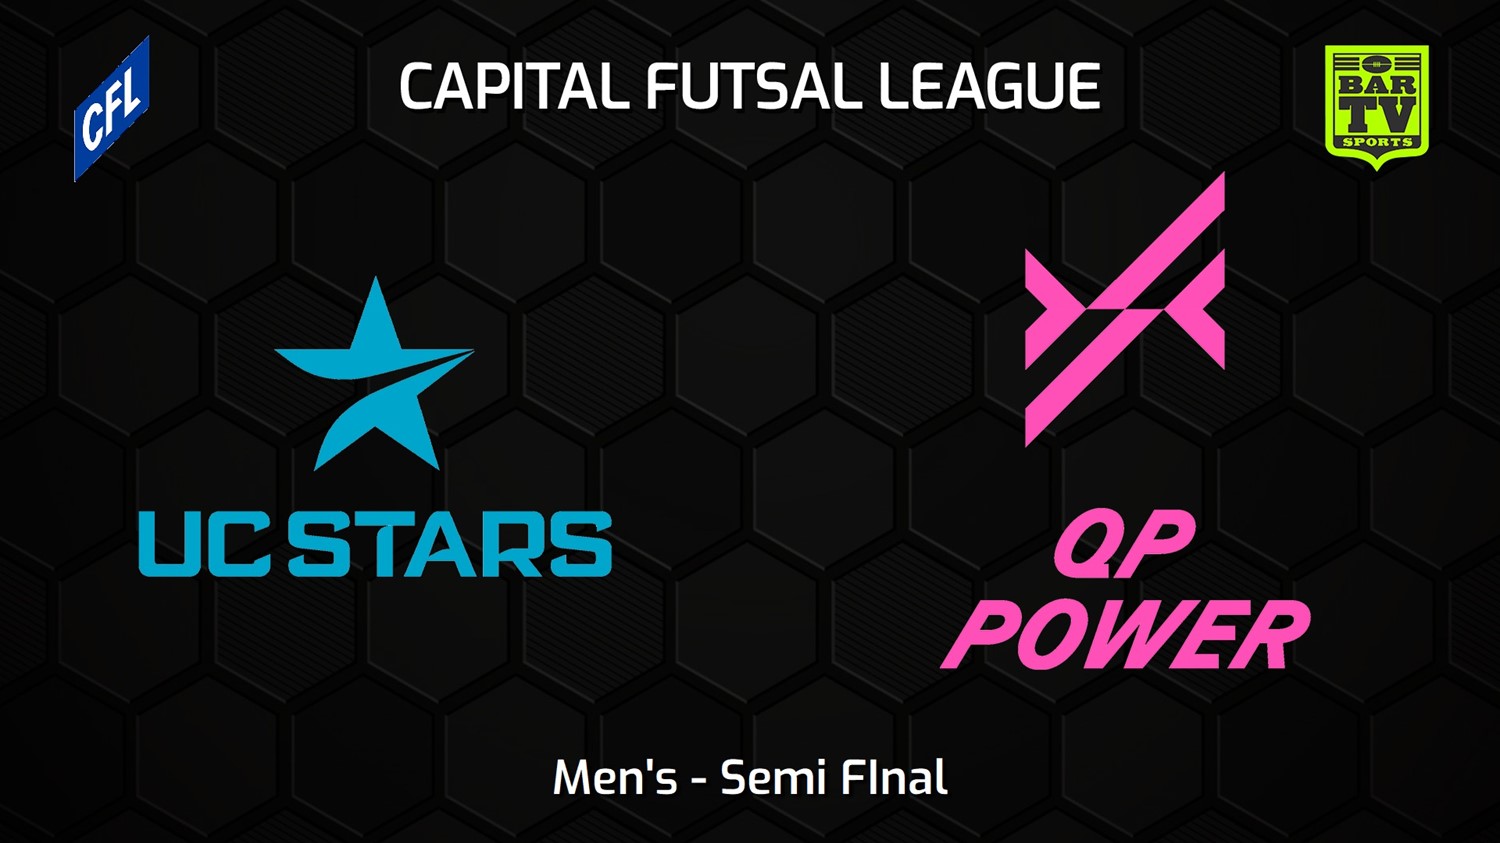 240204-Capital Football Futsal Semi FInal - Men's - UC Stars FC v Queanbeyan-Palerang Power Minigame Slate Image